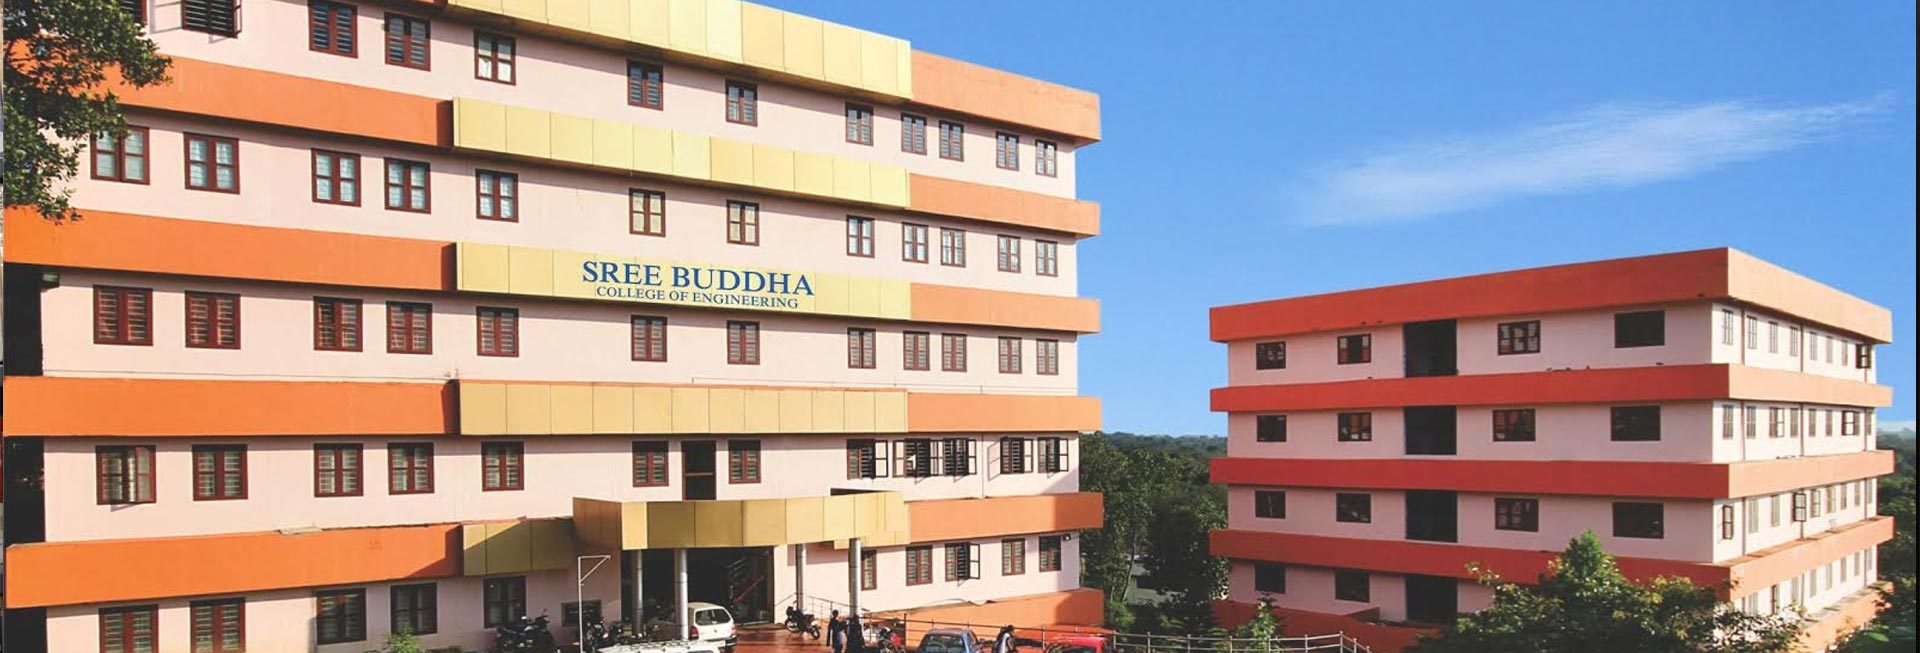 Sree Buddha College of Engineering, Pathanamthitta Image